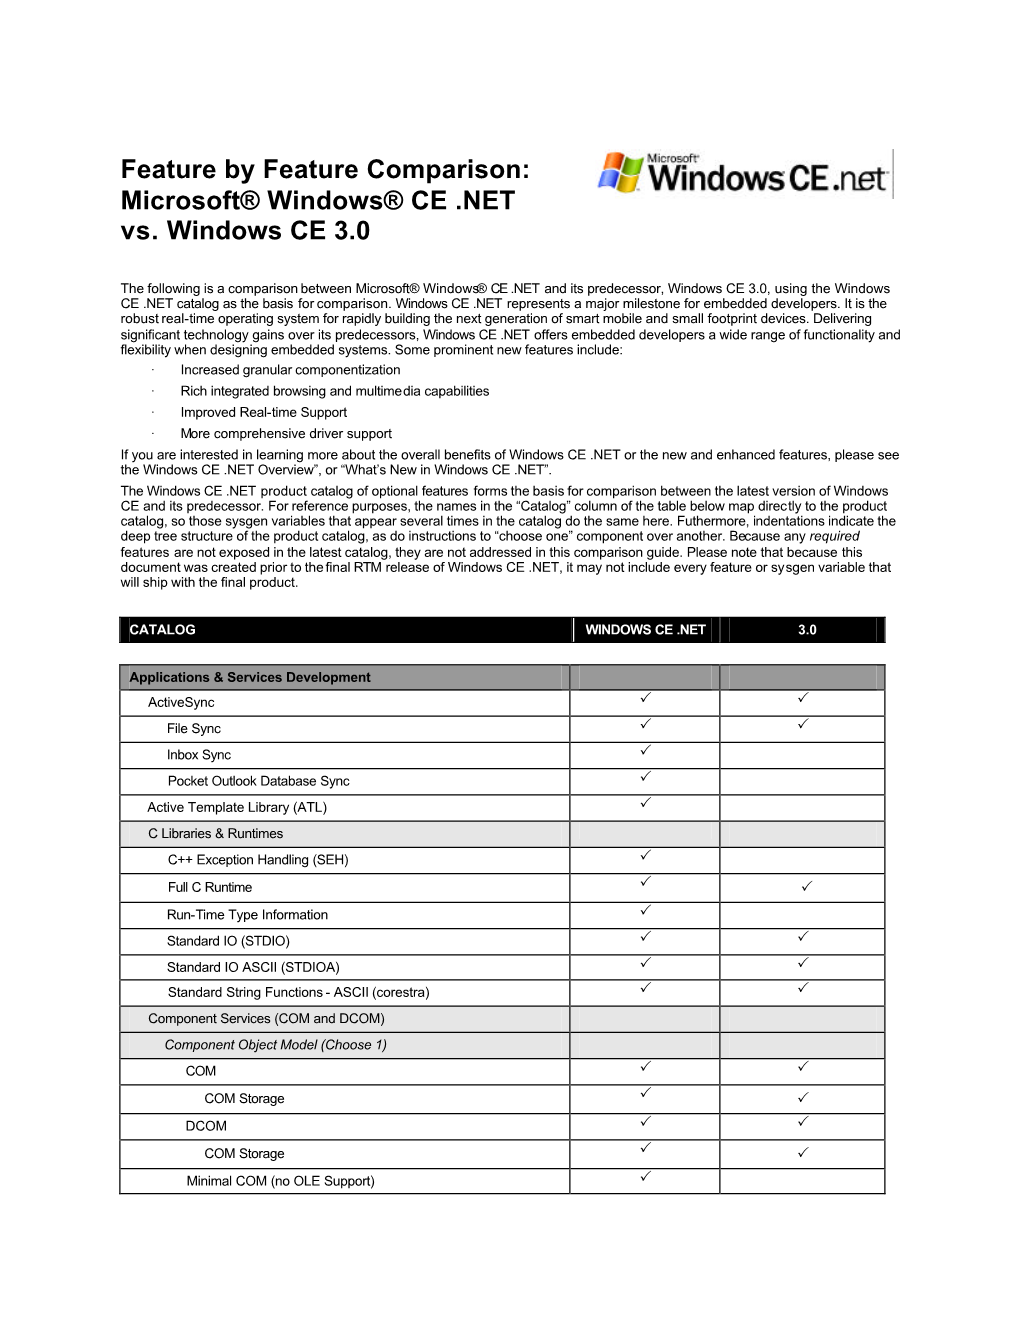 Feature by Feature Comparison: Microsoft® Windows® CE .NET Vs